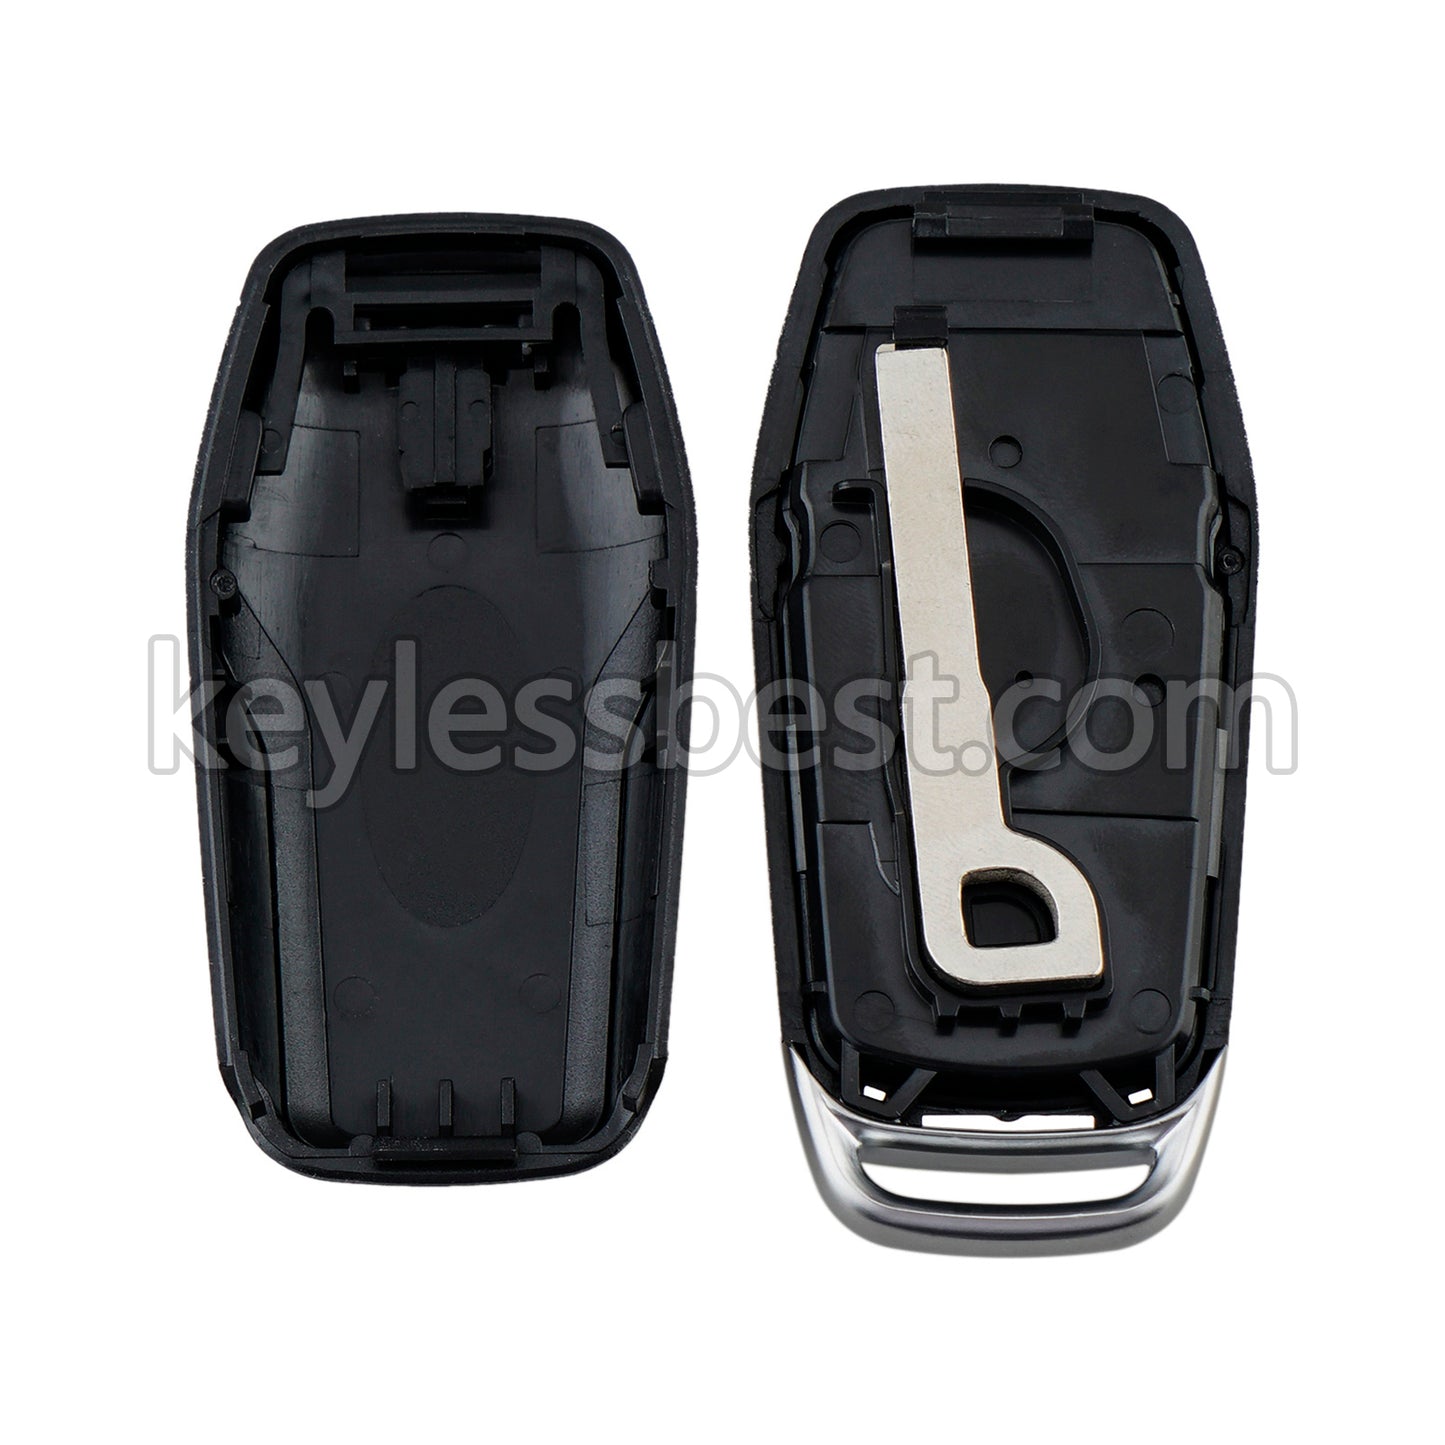 2013-2021 Ford Lincoln / Smart Key Emergency Key / PN: 164-R7992